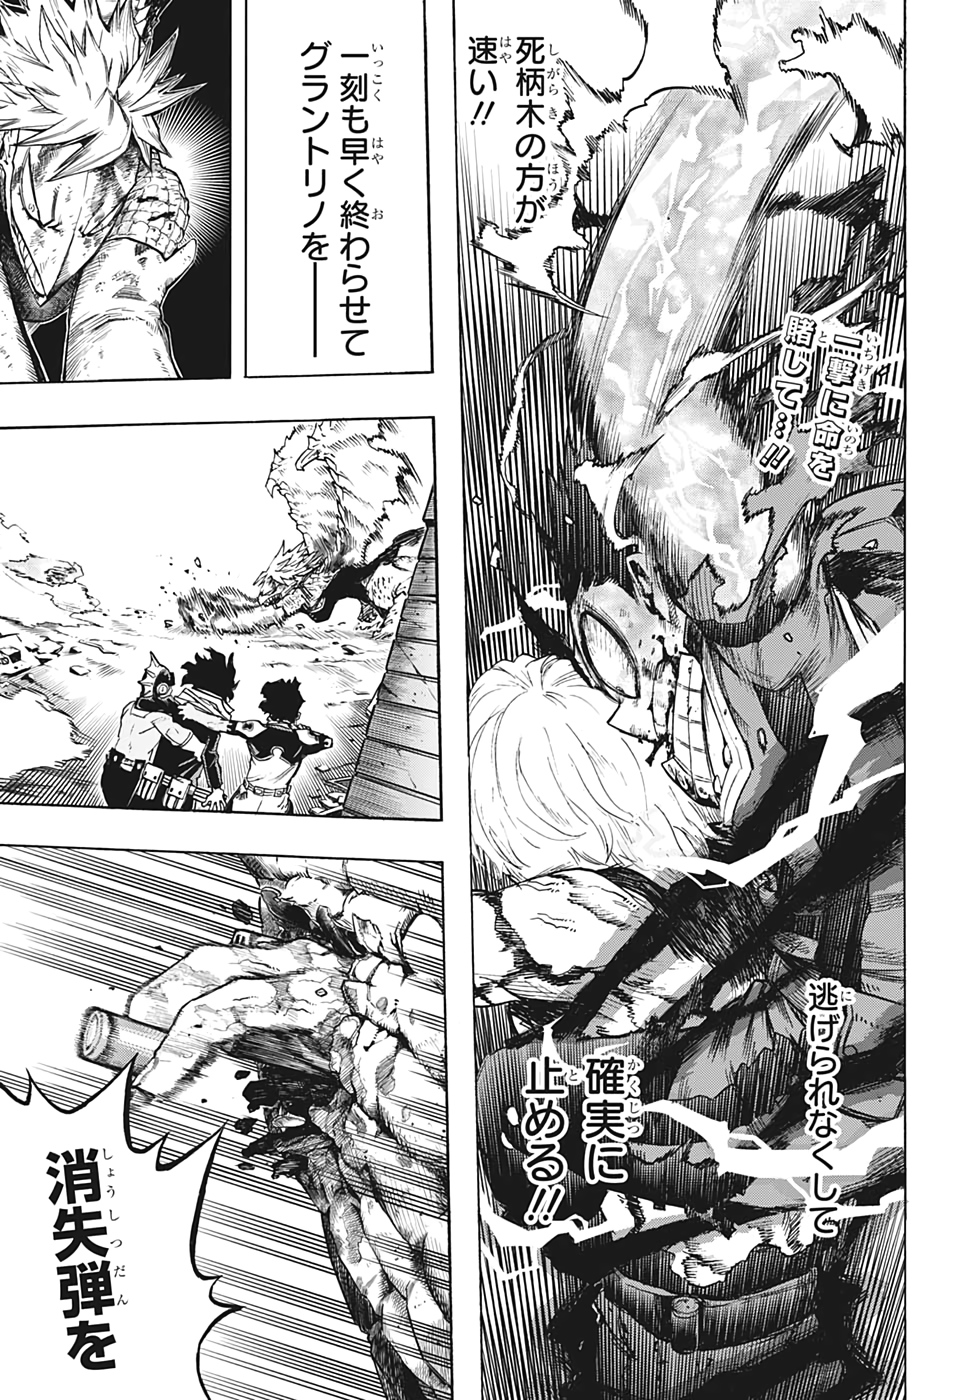 Boku no Hero Academia - Chapter 282 - Page 1